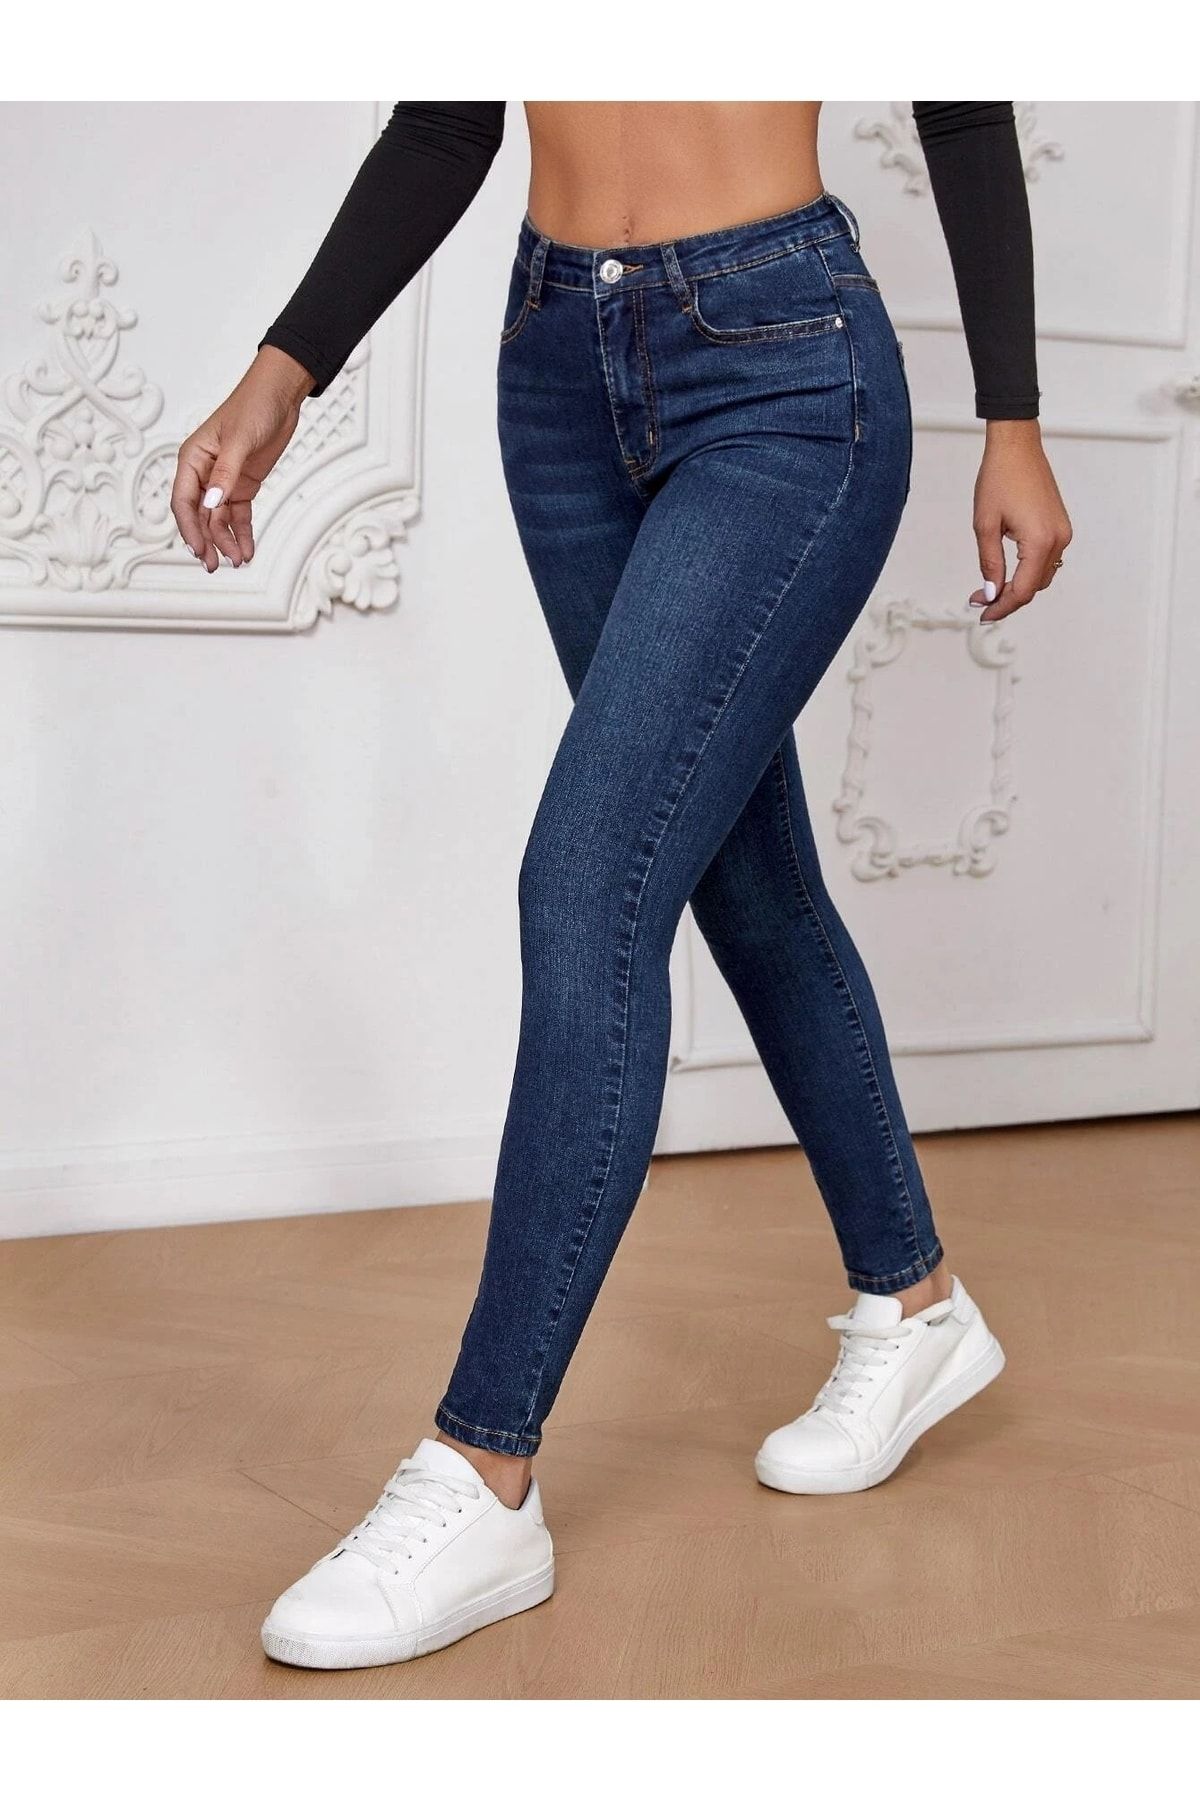 Mad&Calf Kadın Koyu Mavi Yüksek Bel Skinny Fit Jean Pantolon